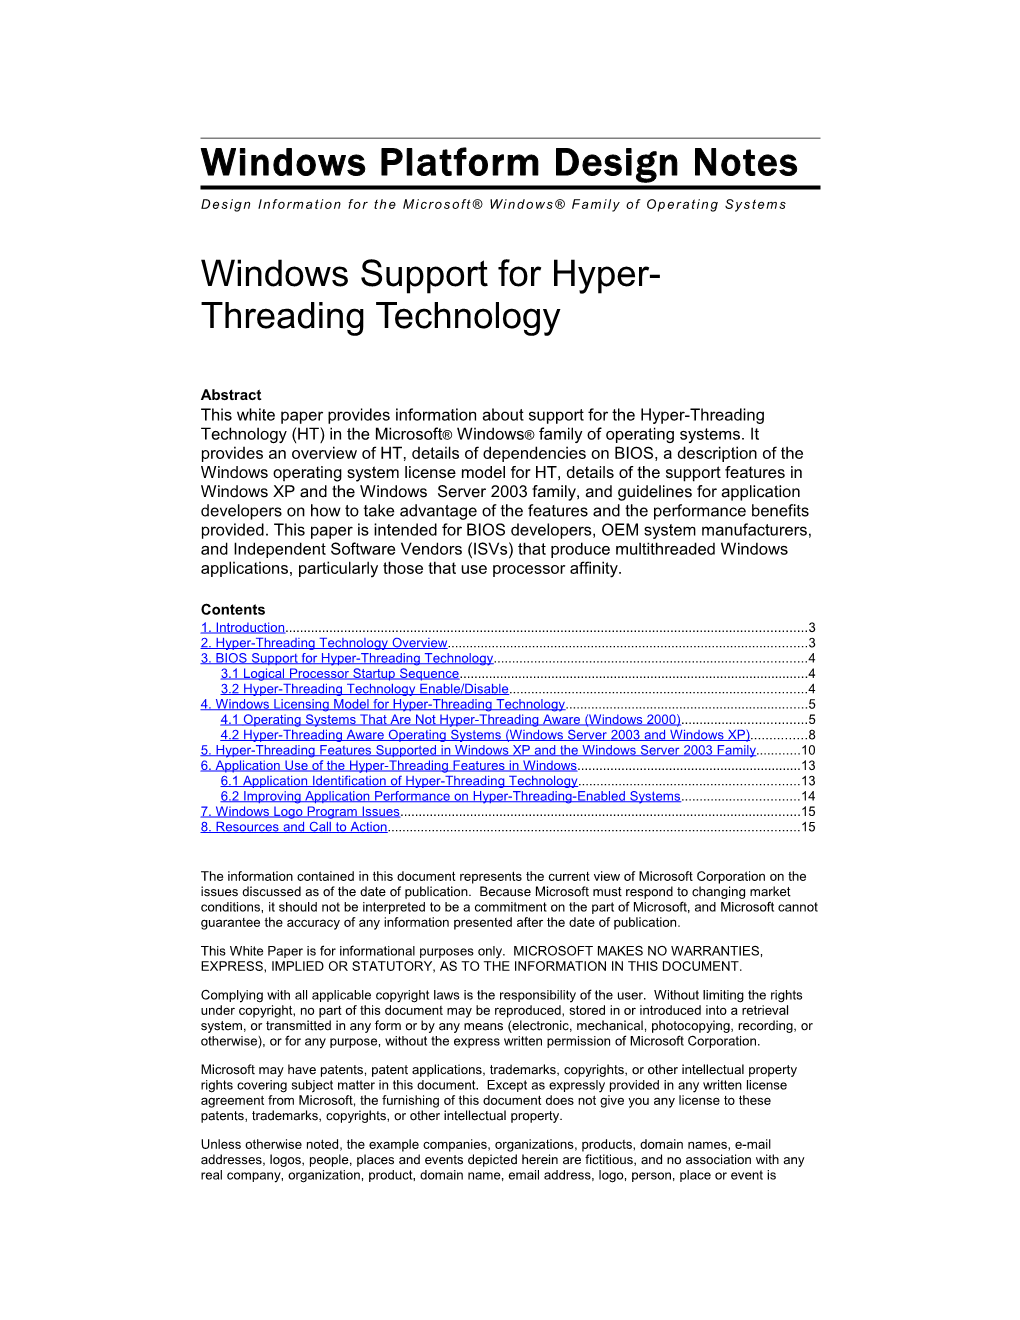 Windows Support for Hyper-Threading Technology